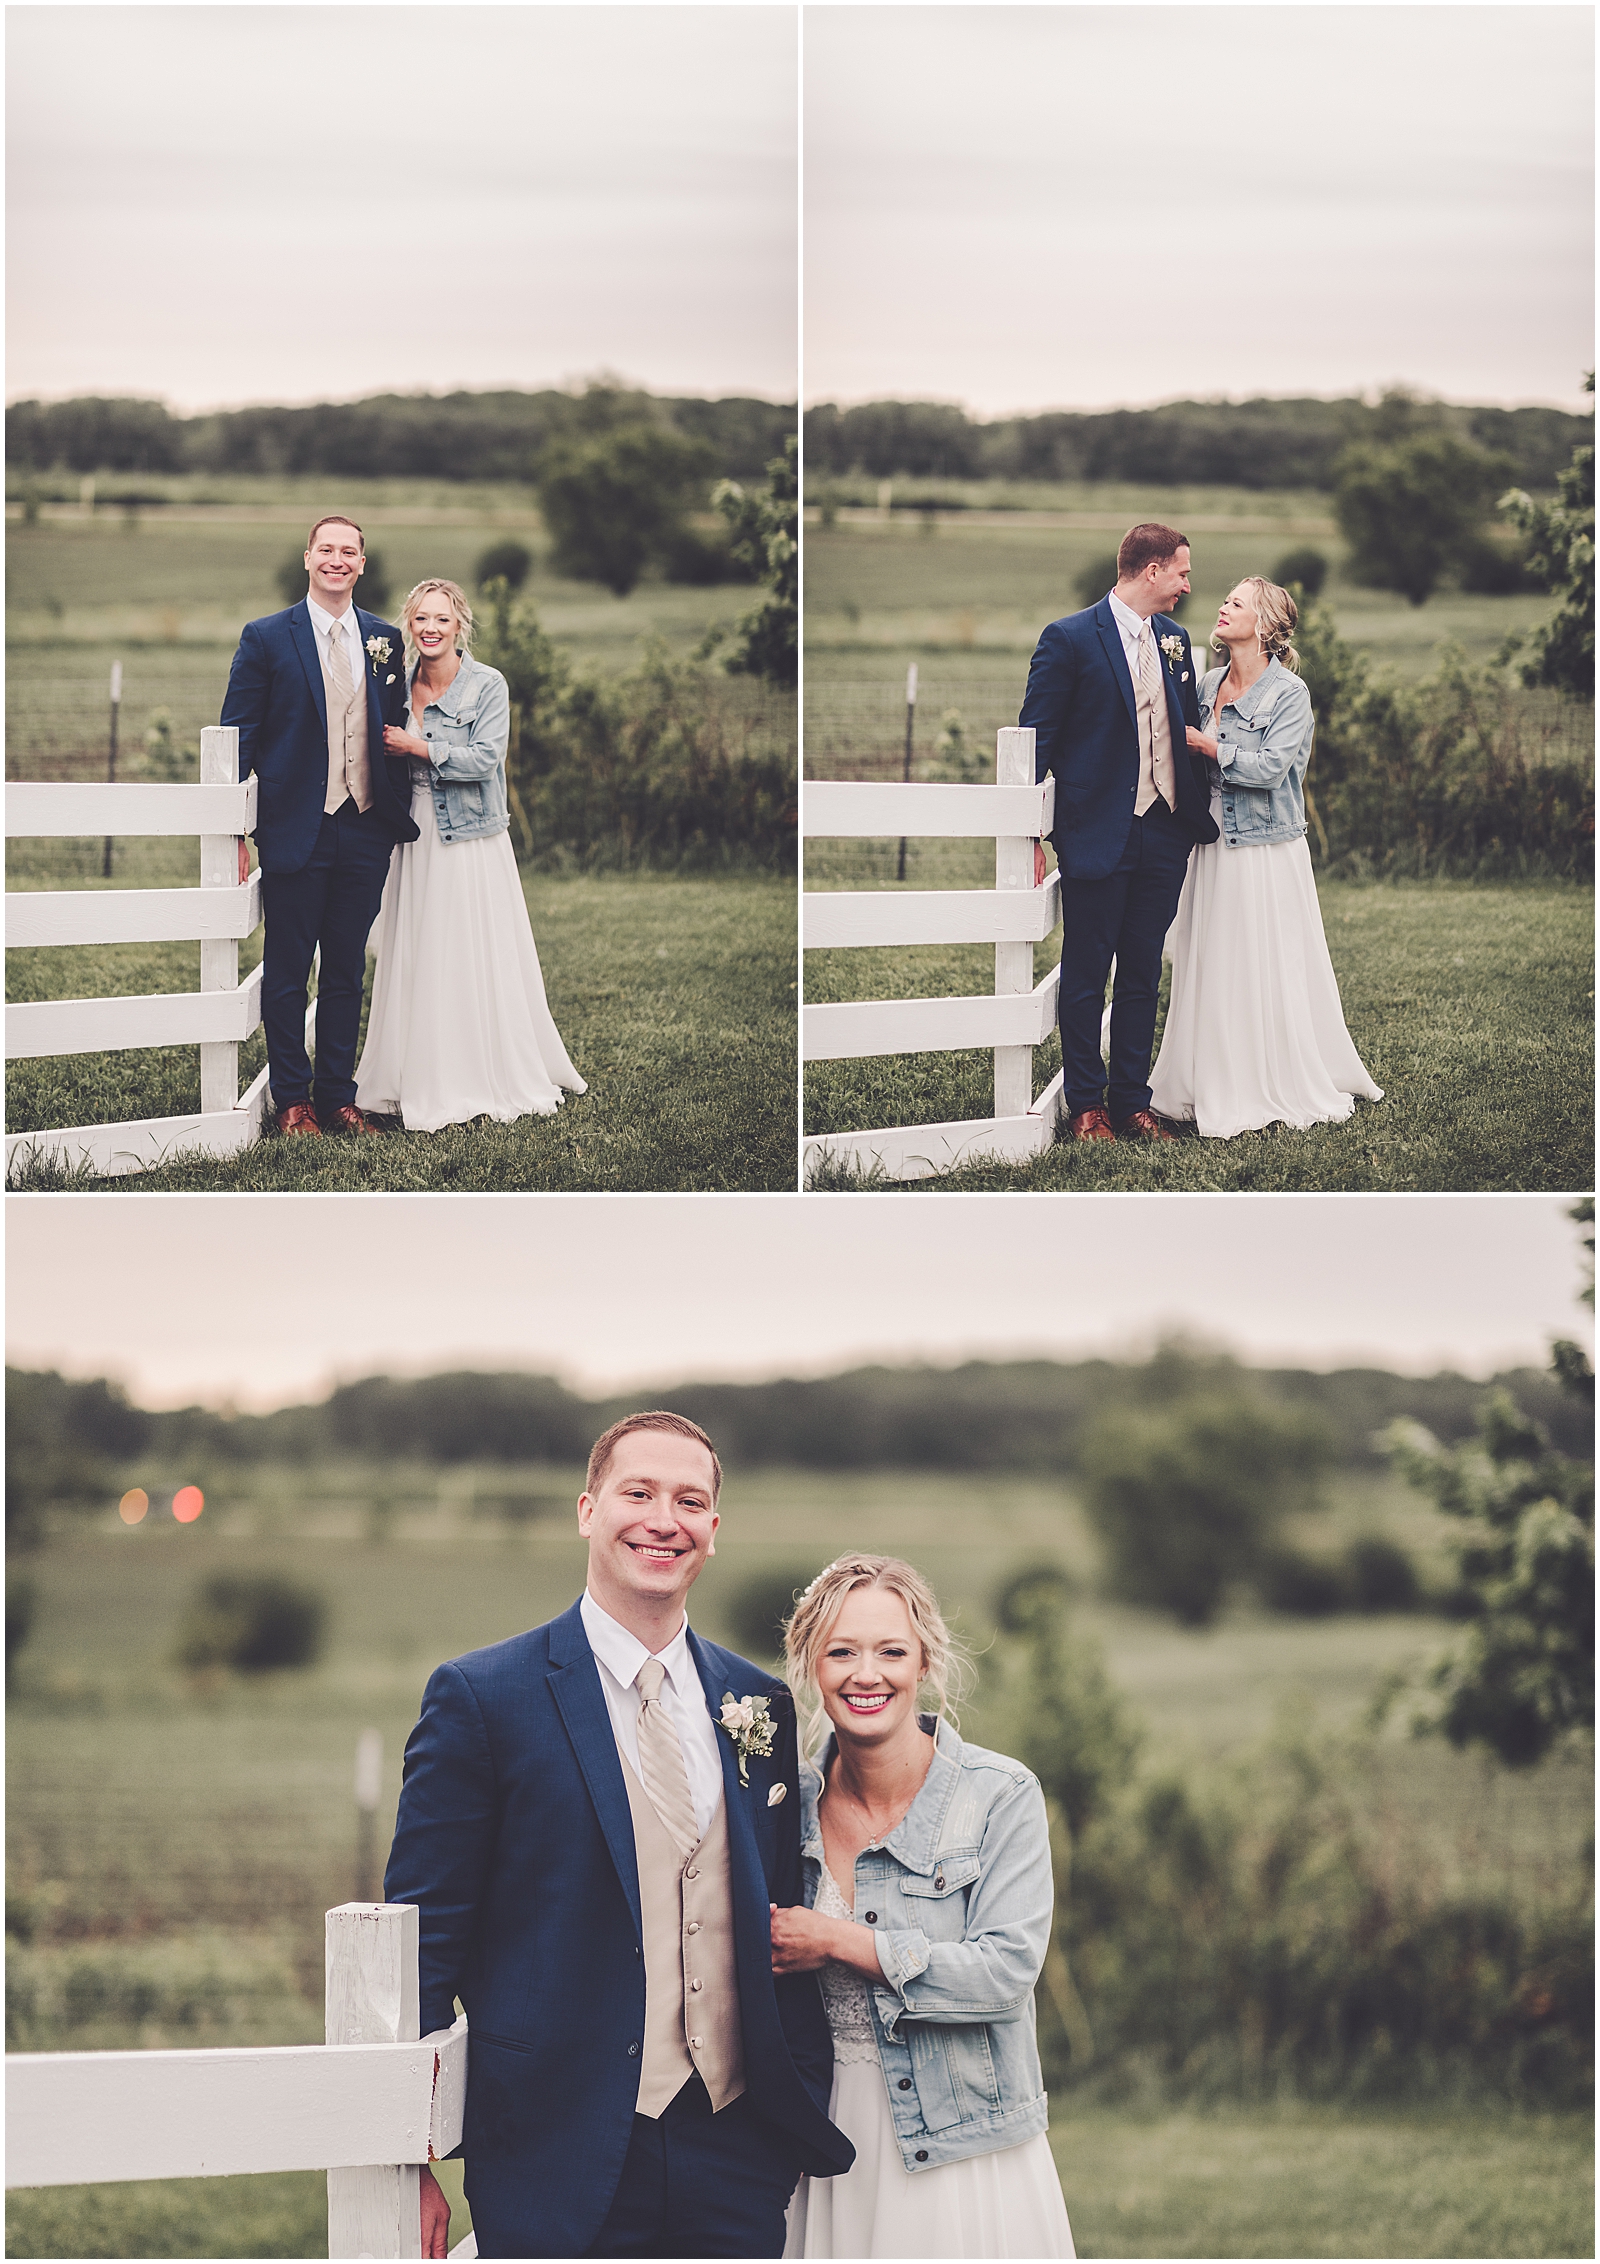 Layne & Ricky's spring wedding at Heritage Prairie Farm in Elburn with Chicagoland wedding photographer Kara Evans Photographer.